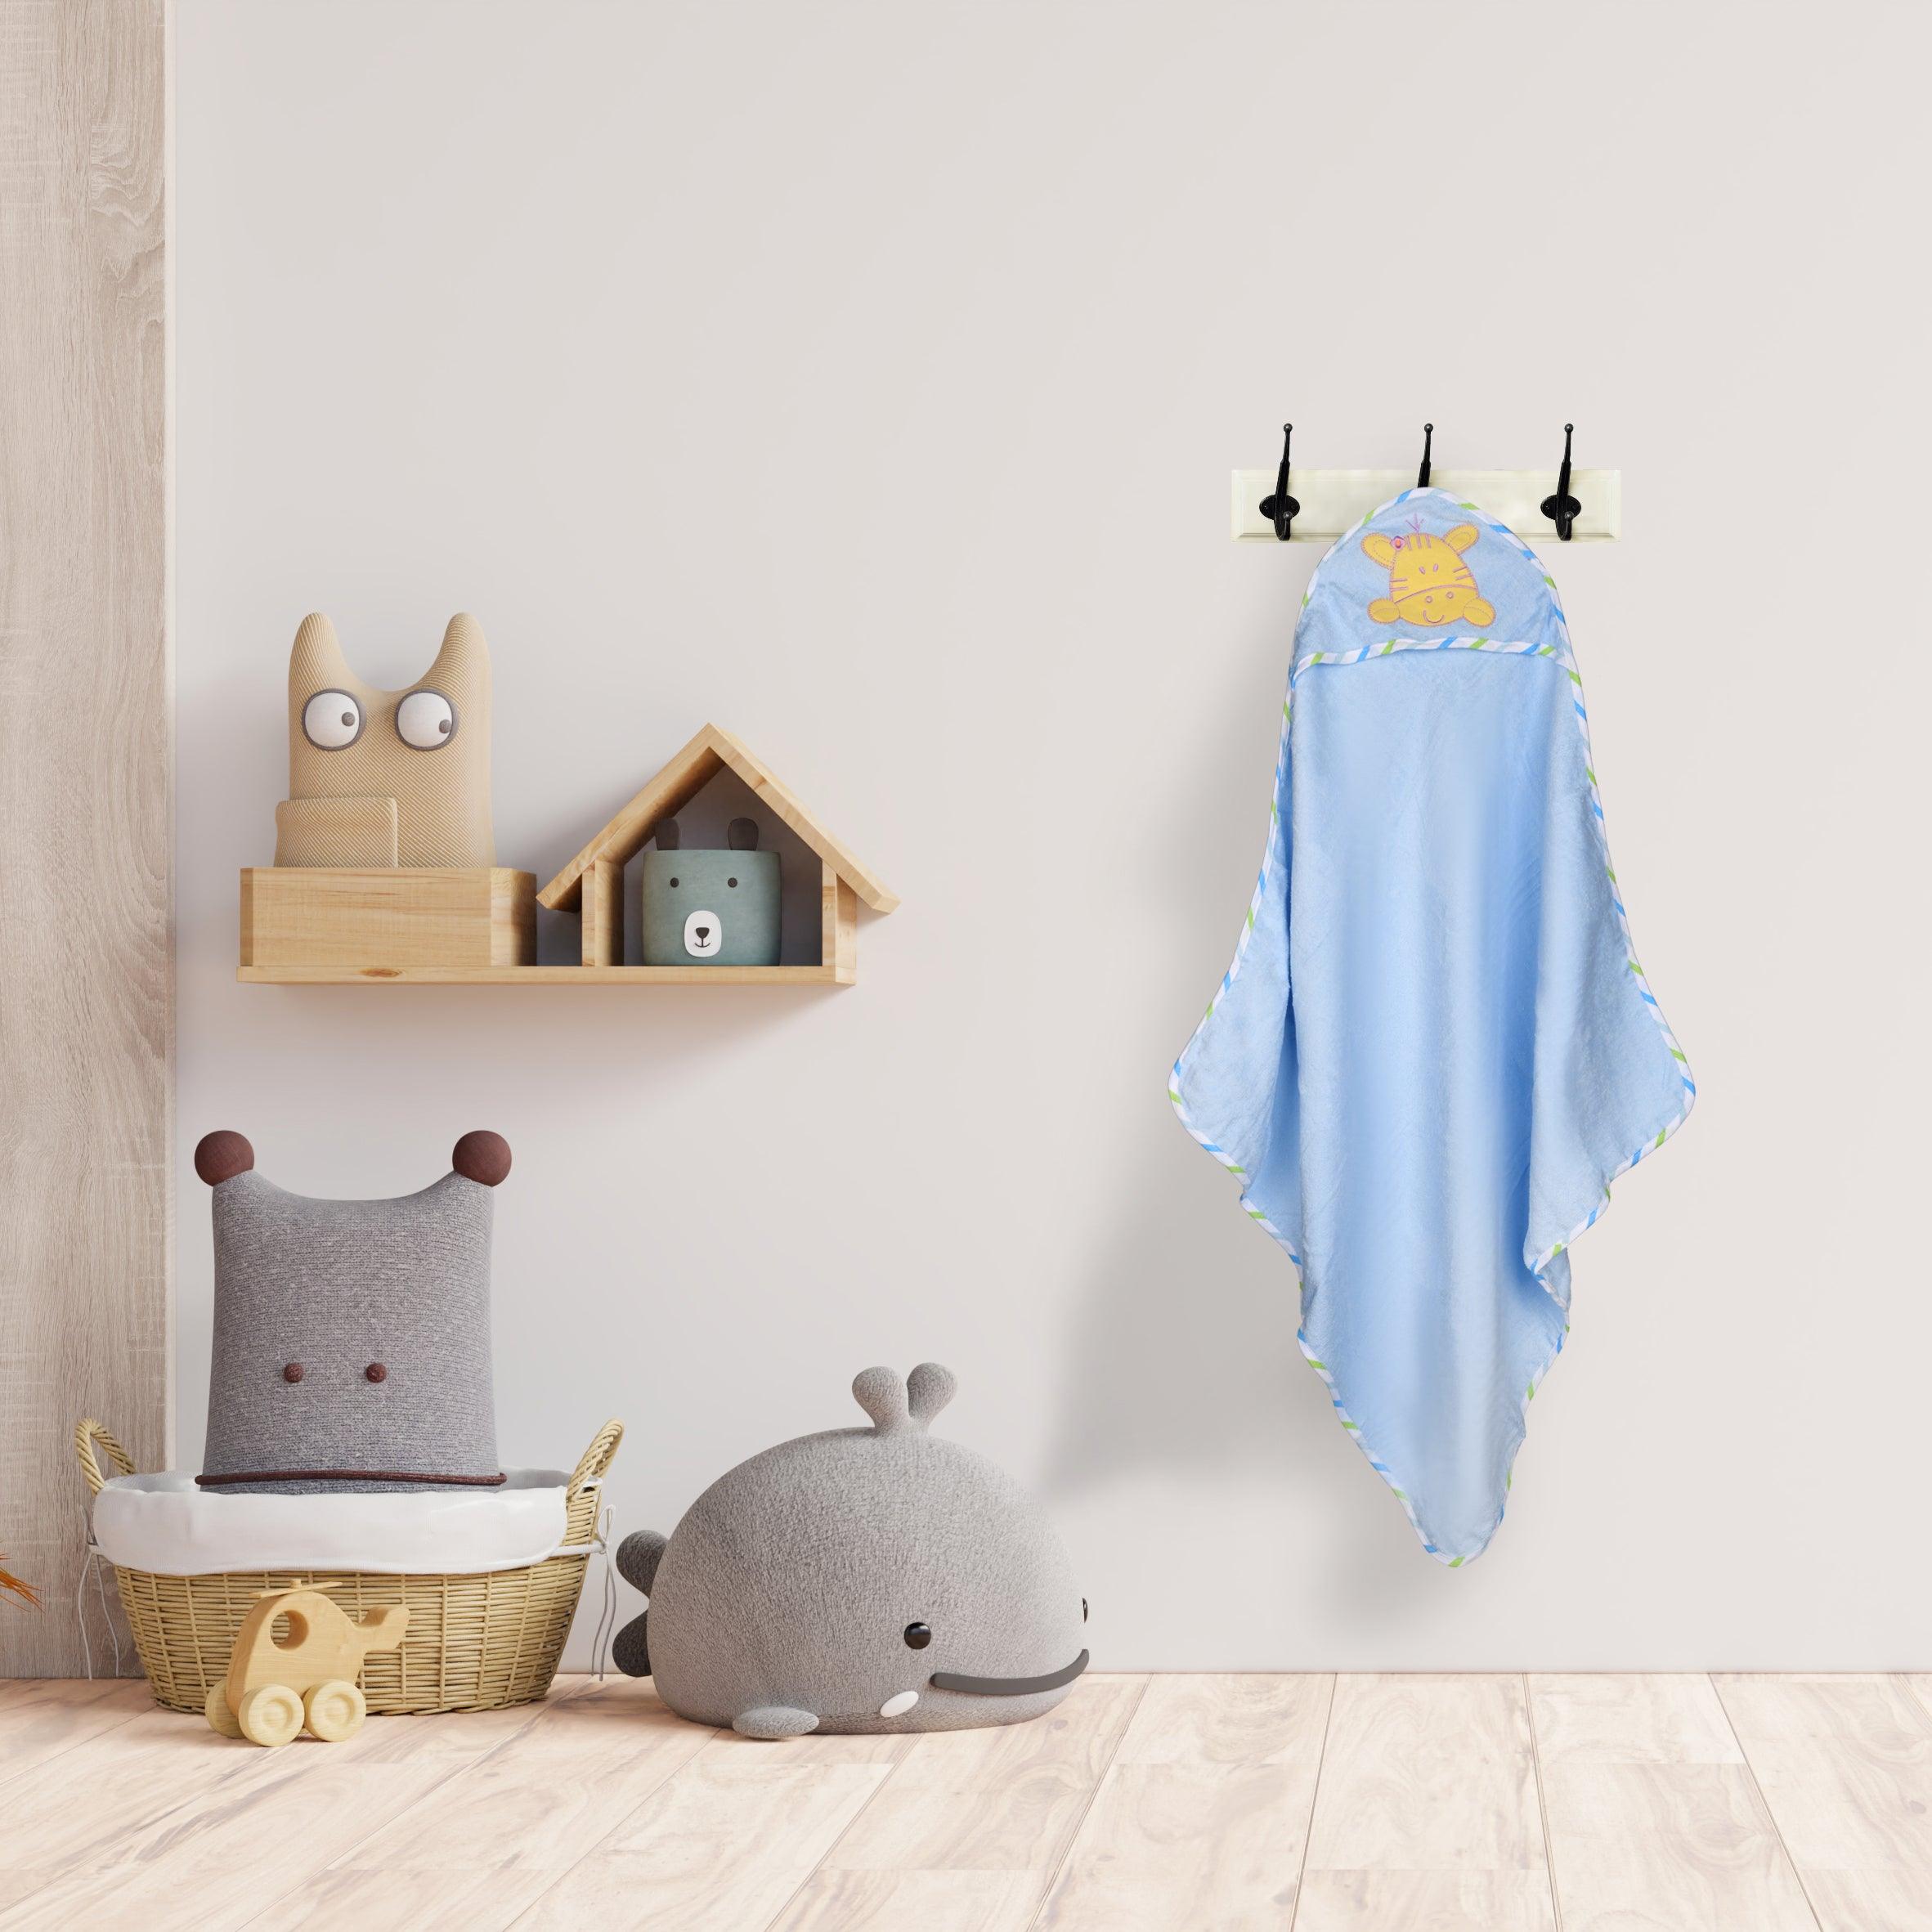 Tiger Blue Applique Hooded Towel & Wash Cloth Set - Baby Moo